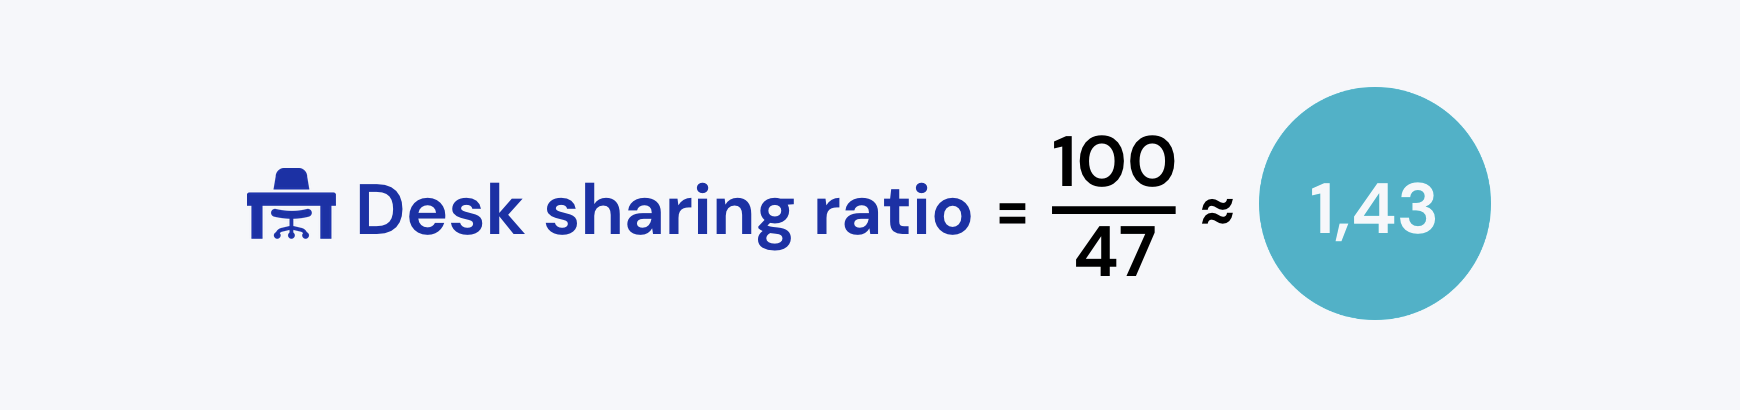 desk sharing ratio calculation example